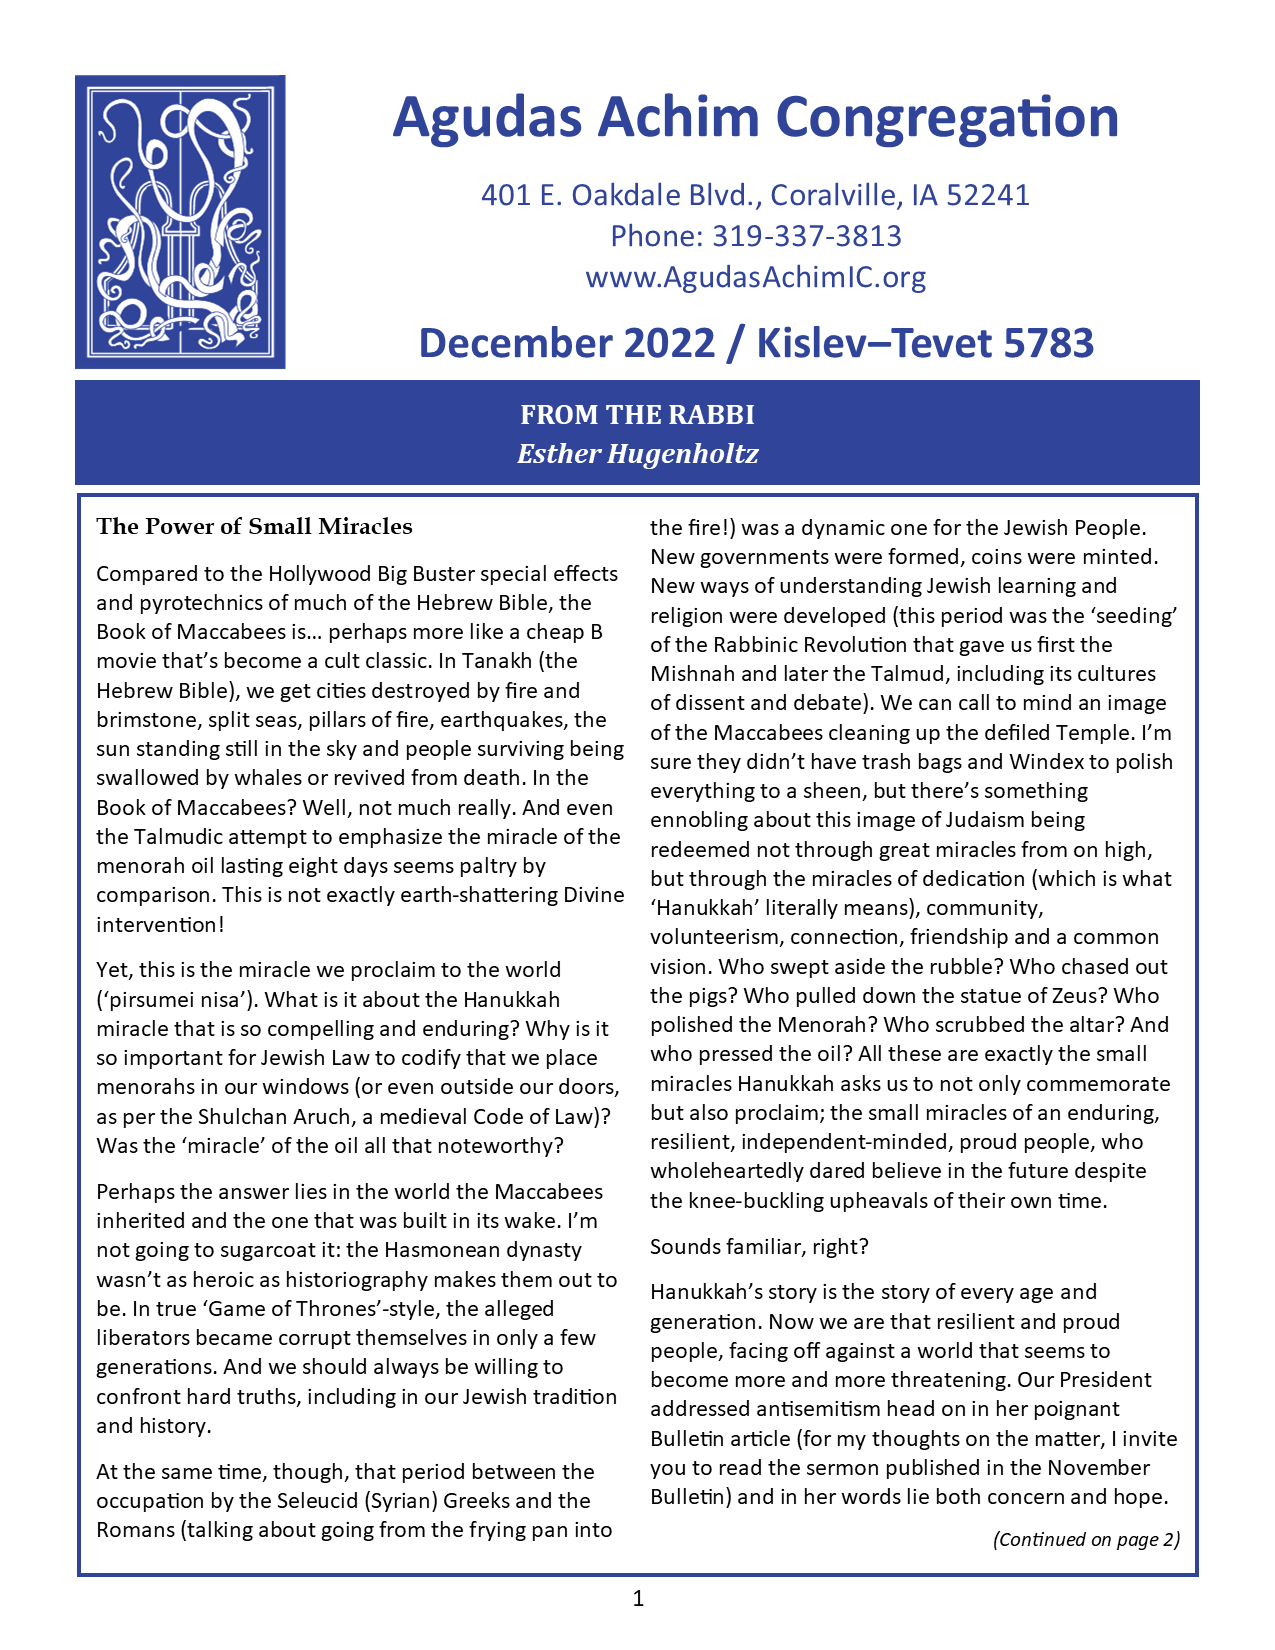 December 2022 Bulletin Cover